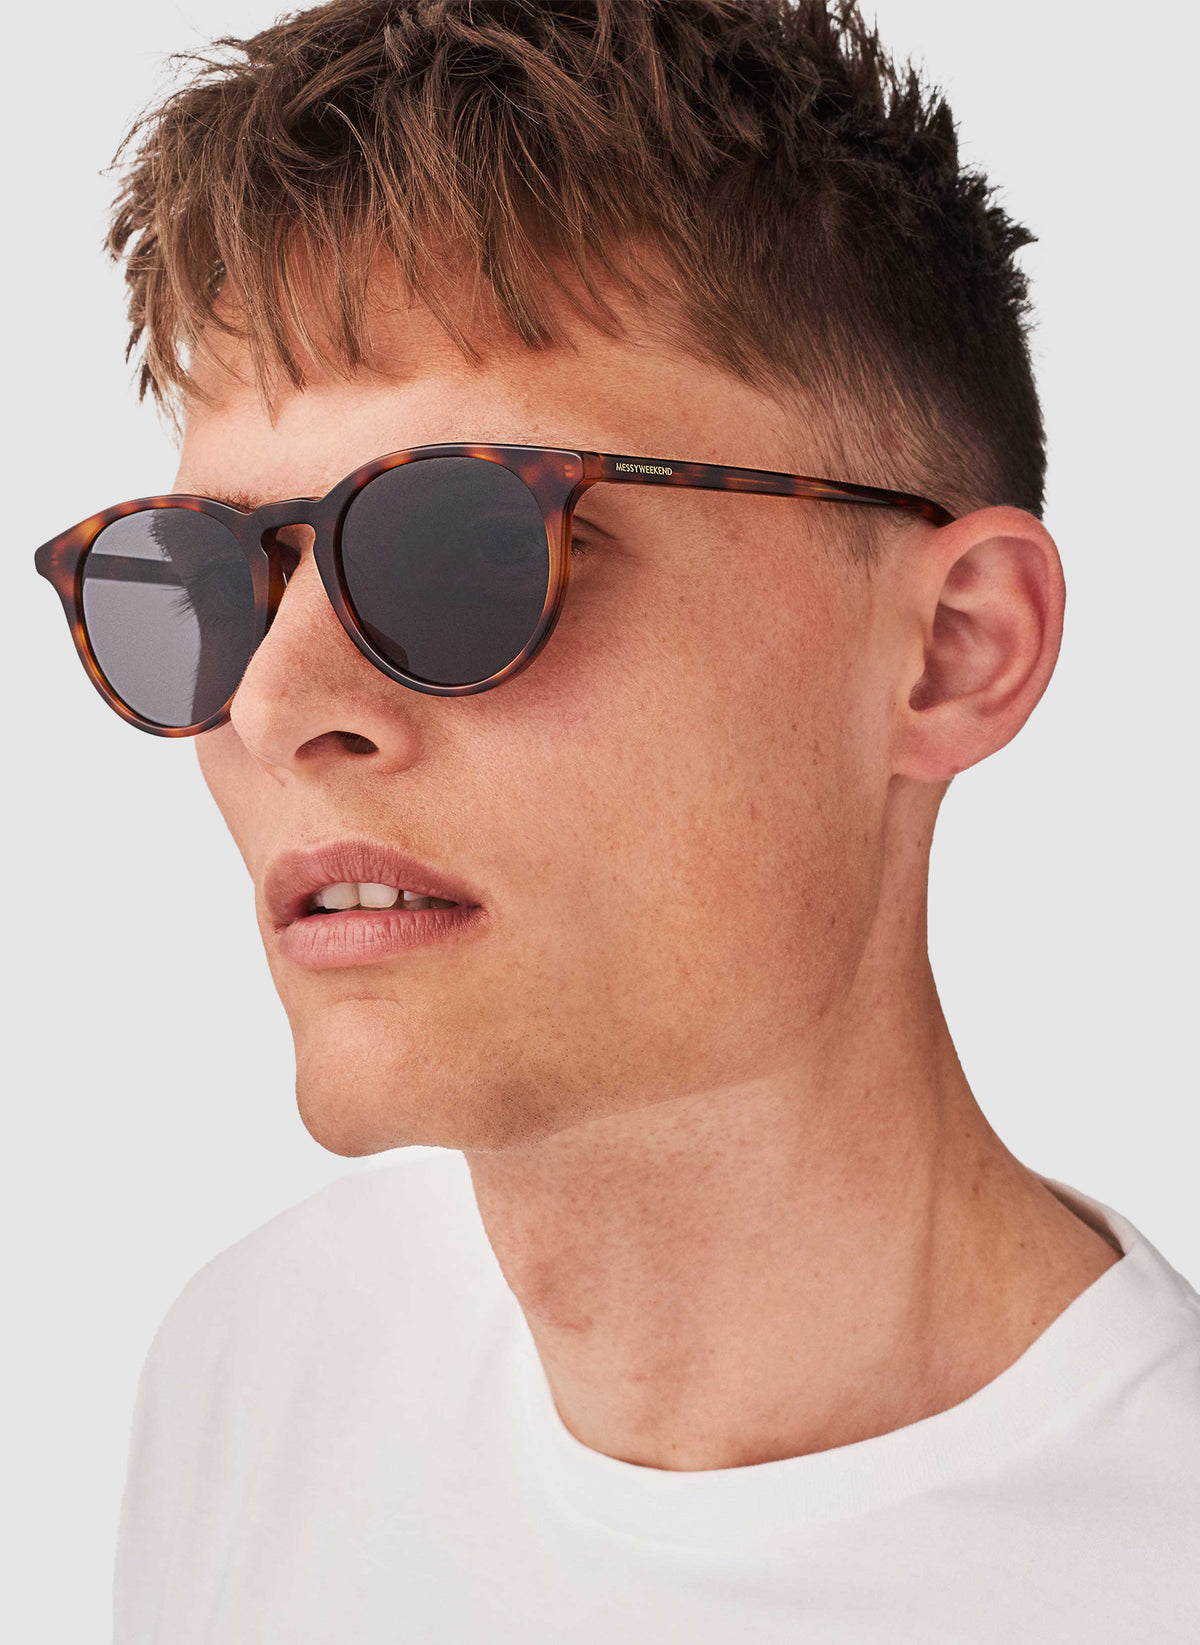 New Depp Sunglasses - Brown Tortoise